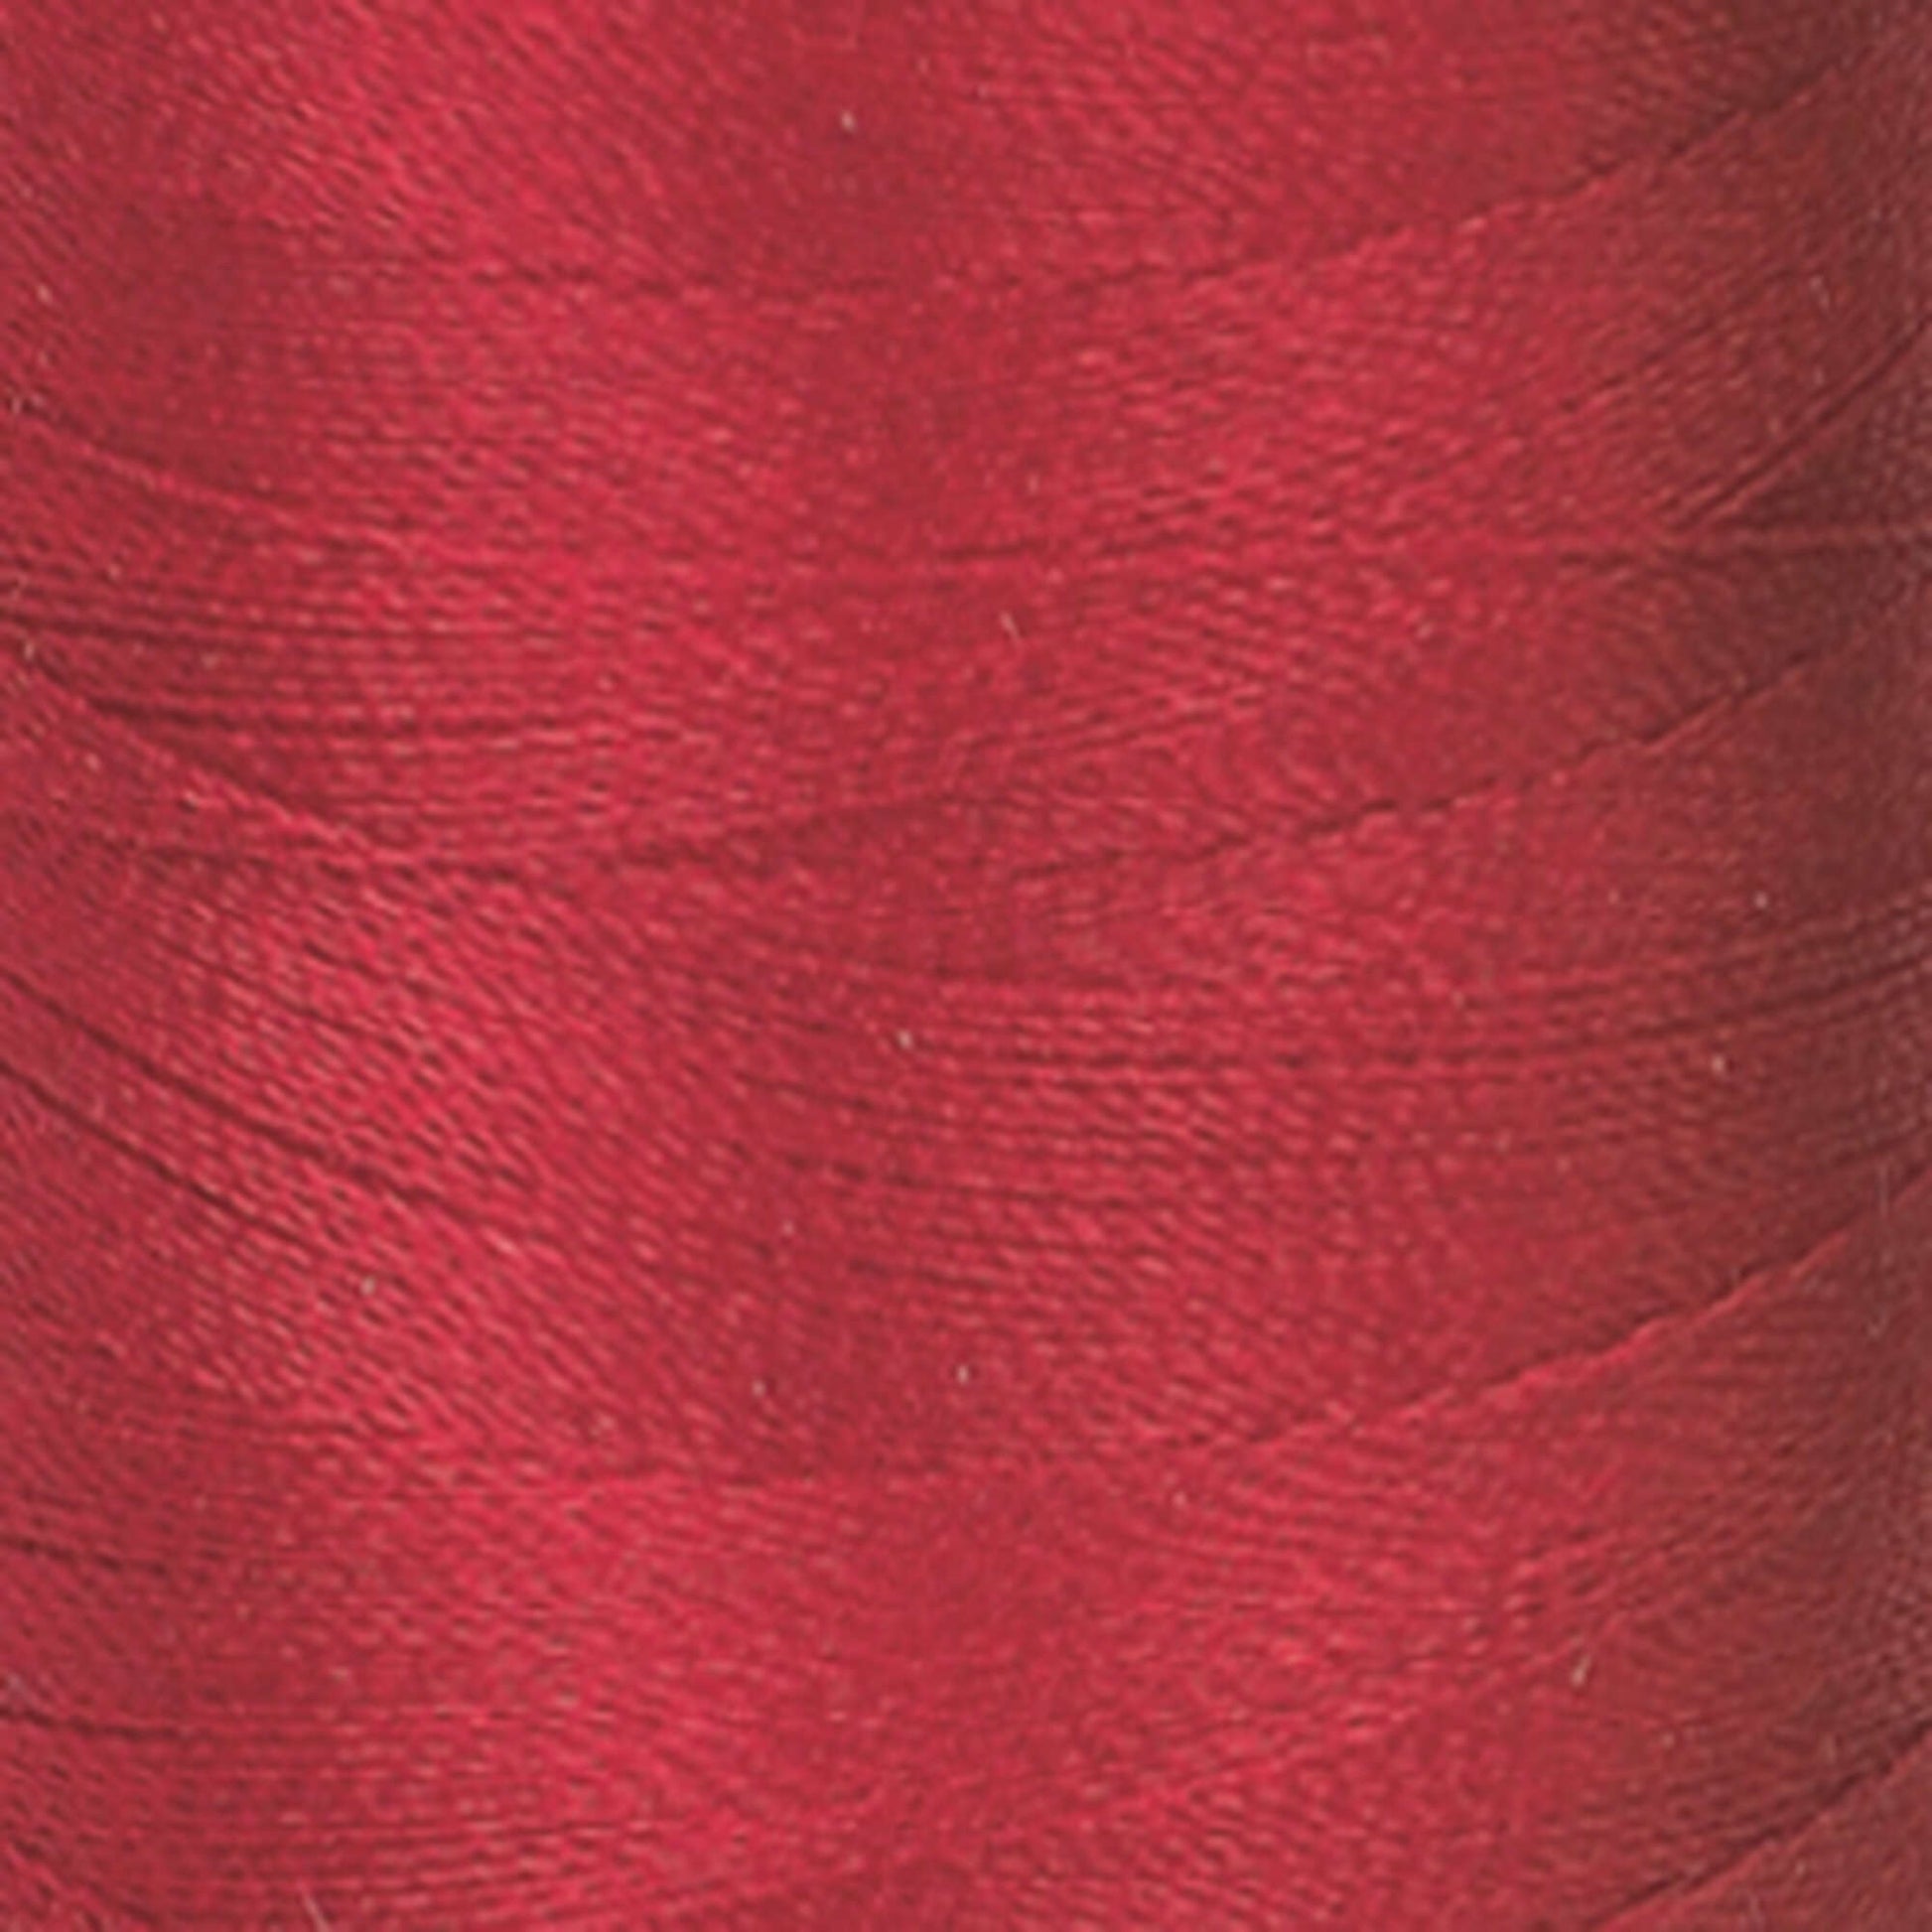 Coats & Clark Machine Embroidery Thread (1100 Yards) Crimson